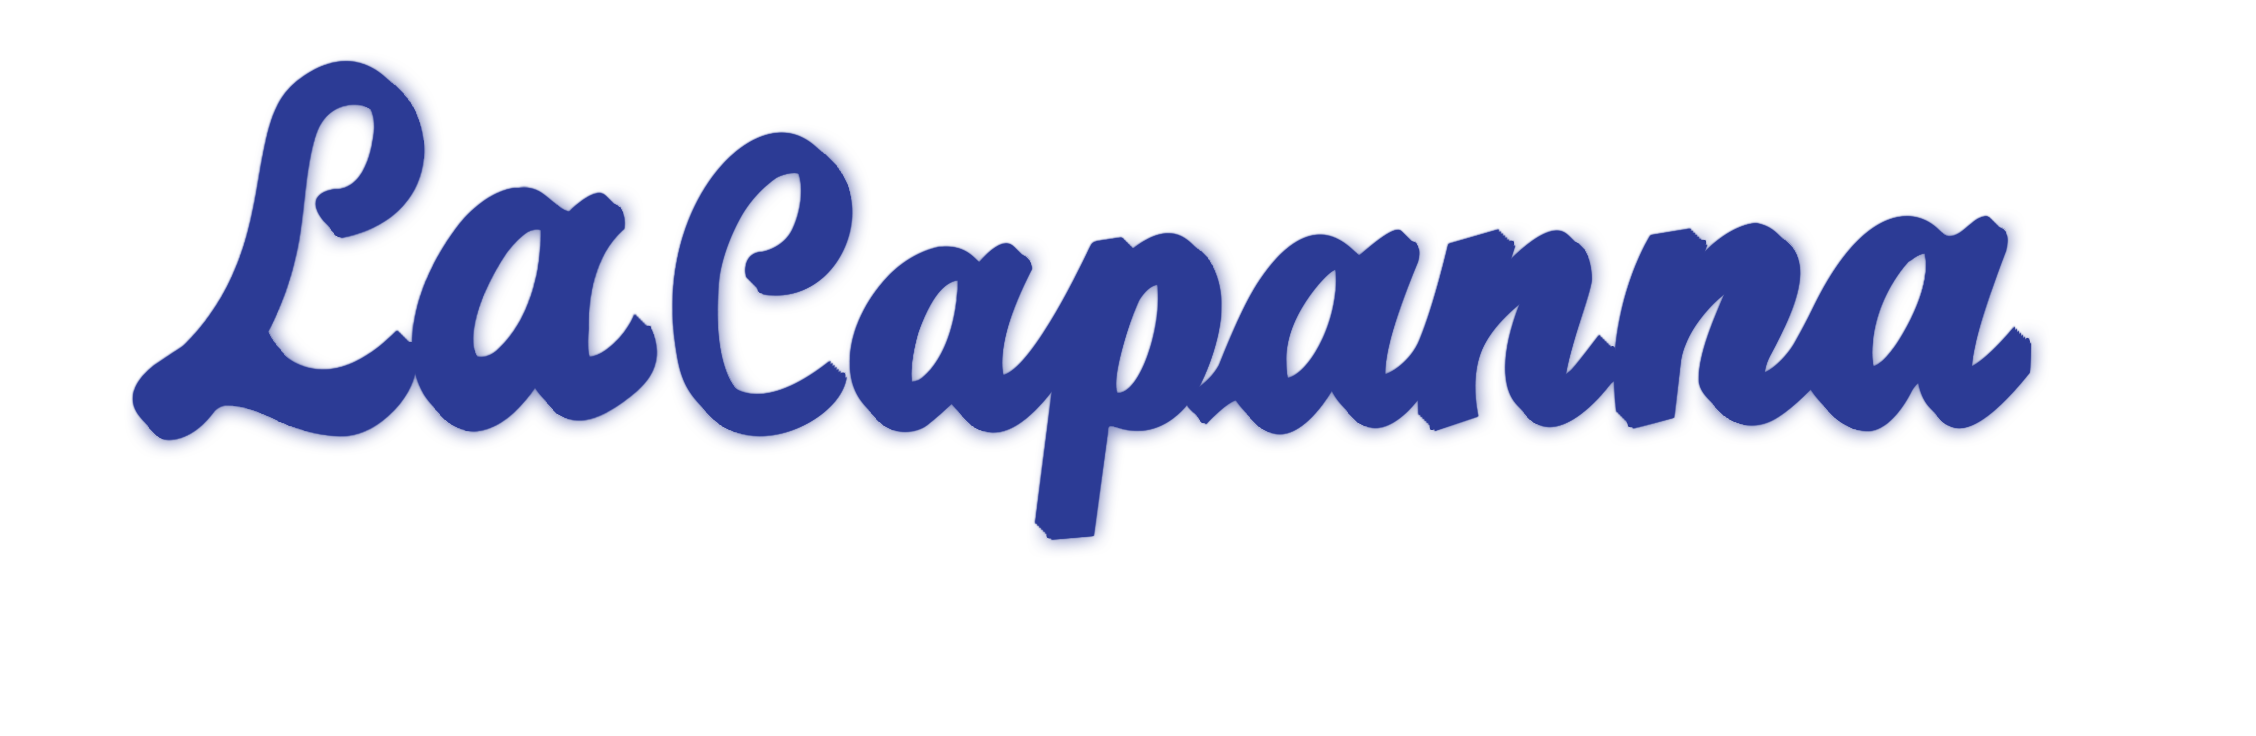 La Capanna Takeaway Fish and Chip Shop Livingston logo